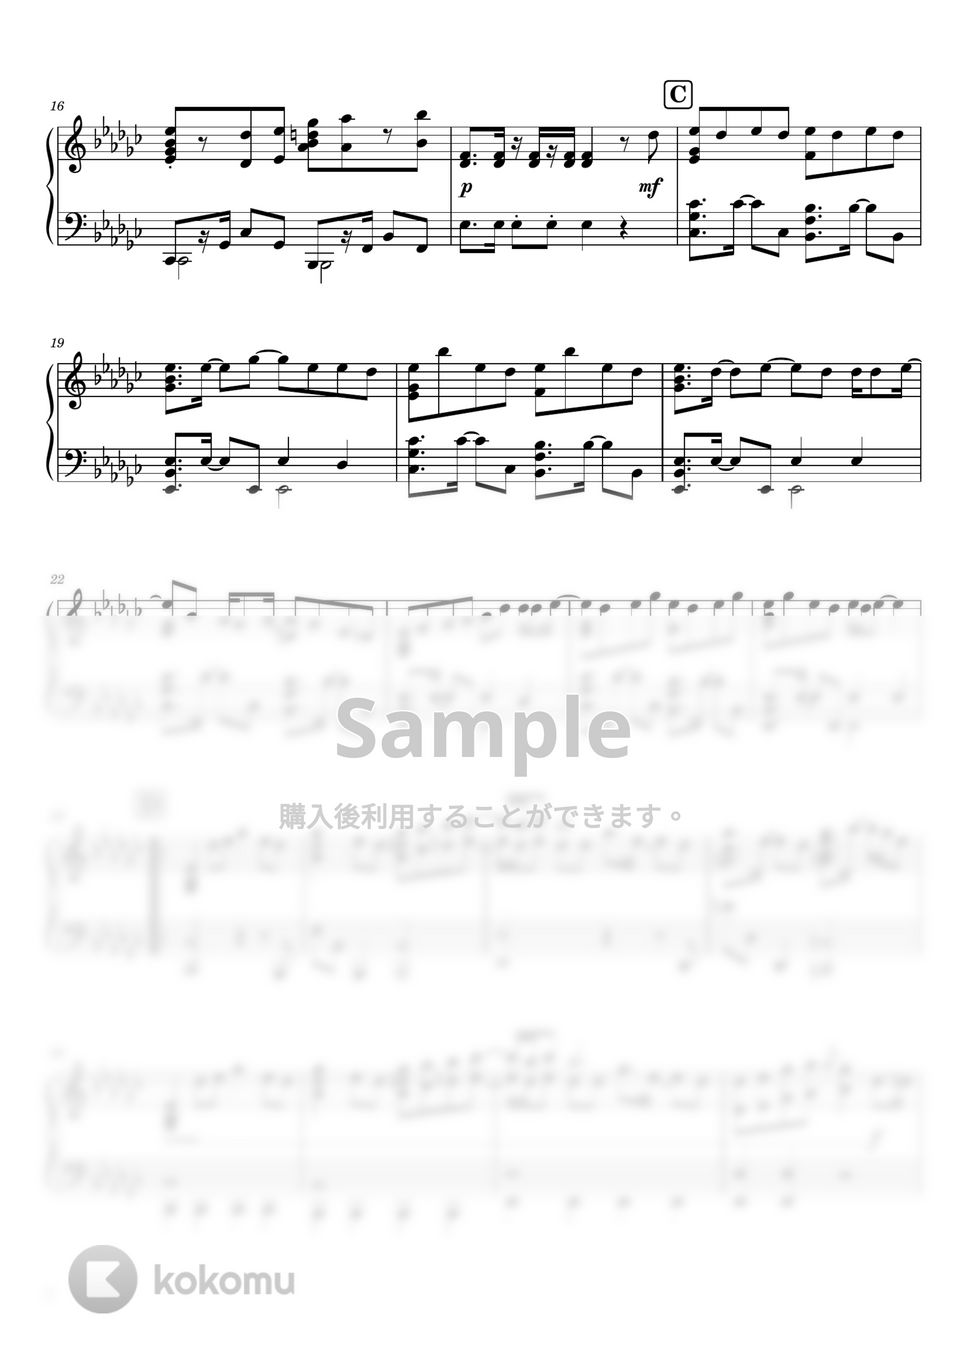 Da-iCE - スターマイン (ピアノソロ / 上級) by SuperMomoFactory